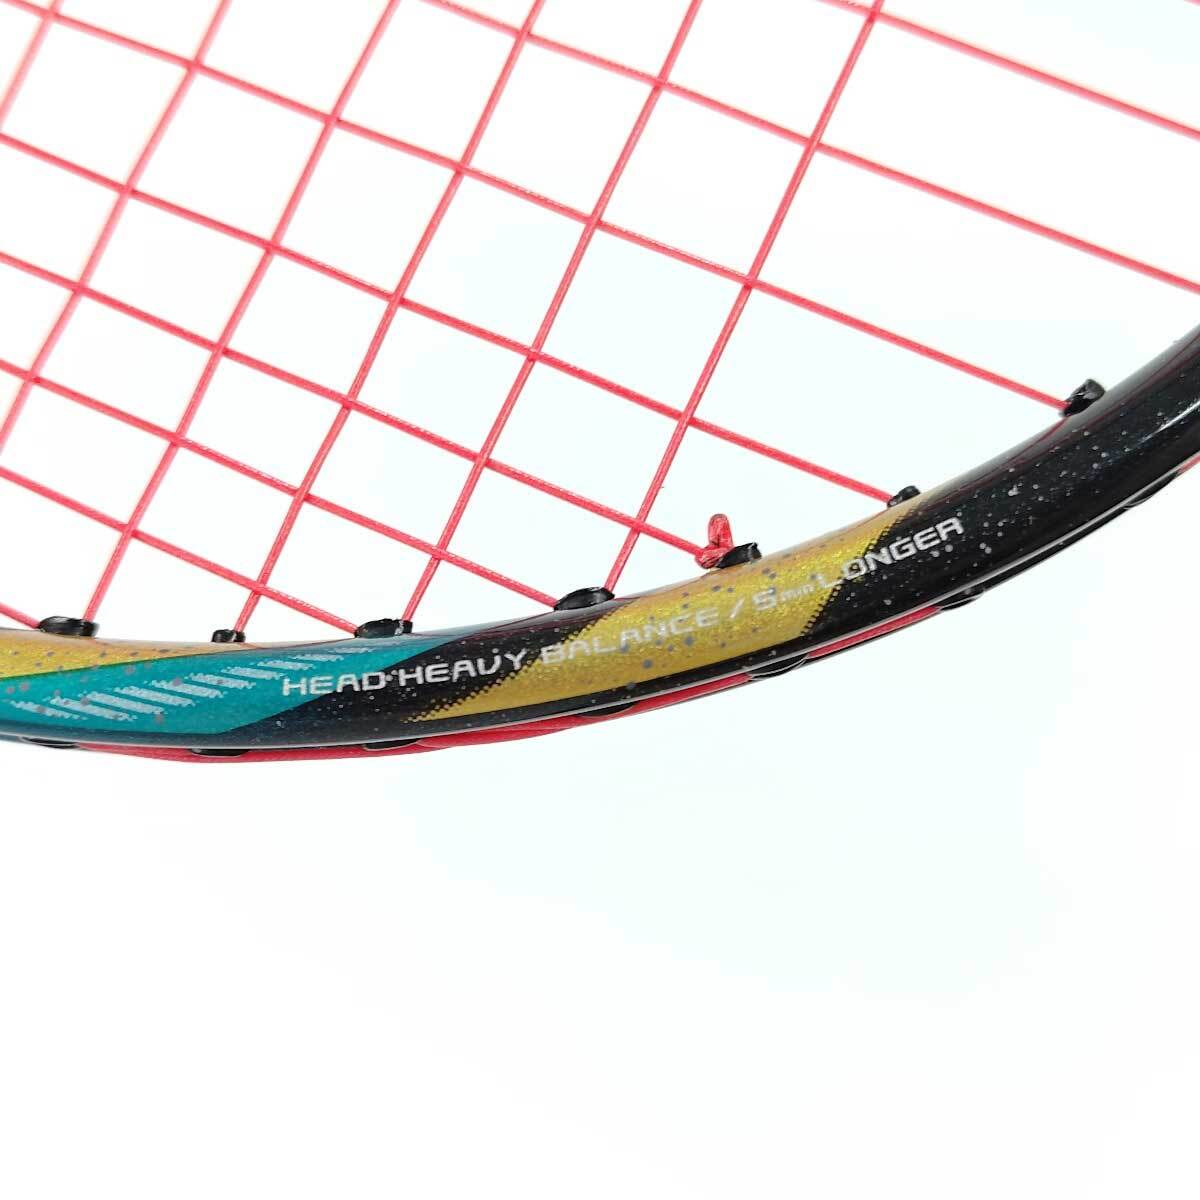 [ used ] Yonex Astro ks88S Pro badminton racket ASTROX88S PRO 3UG5 YONEX